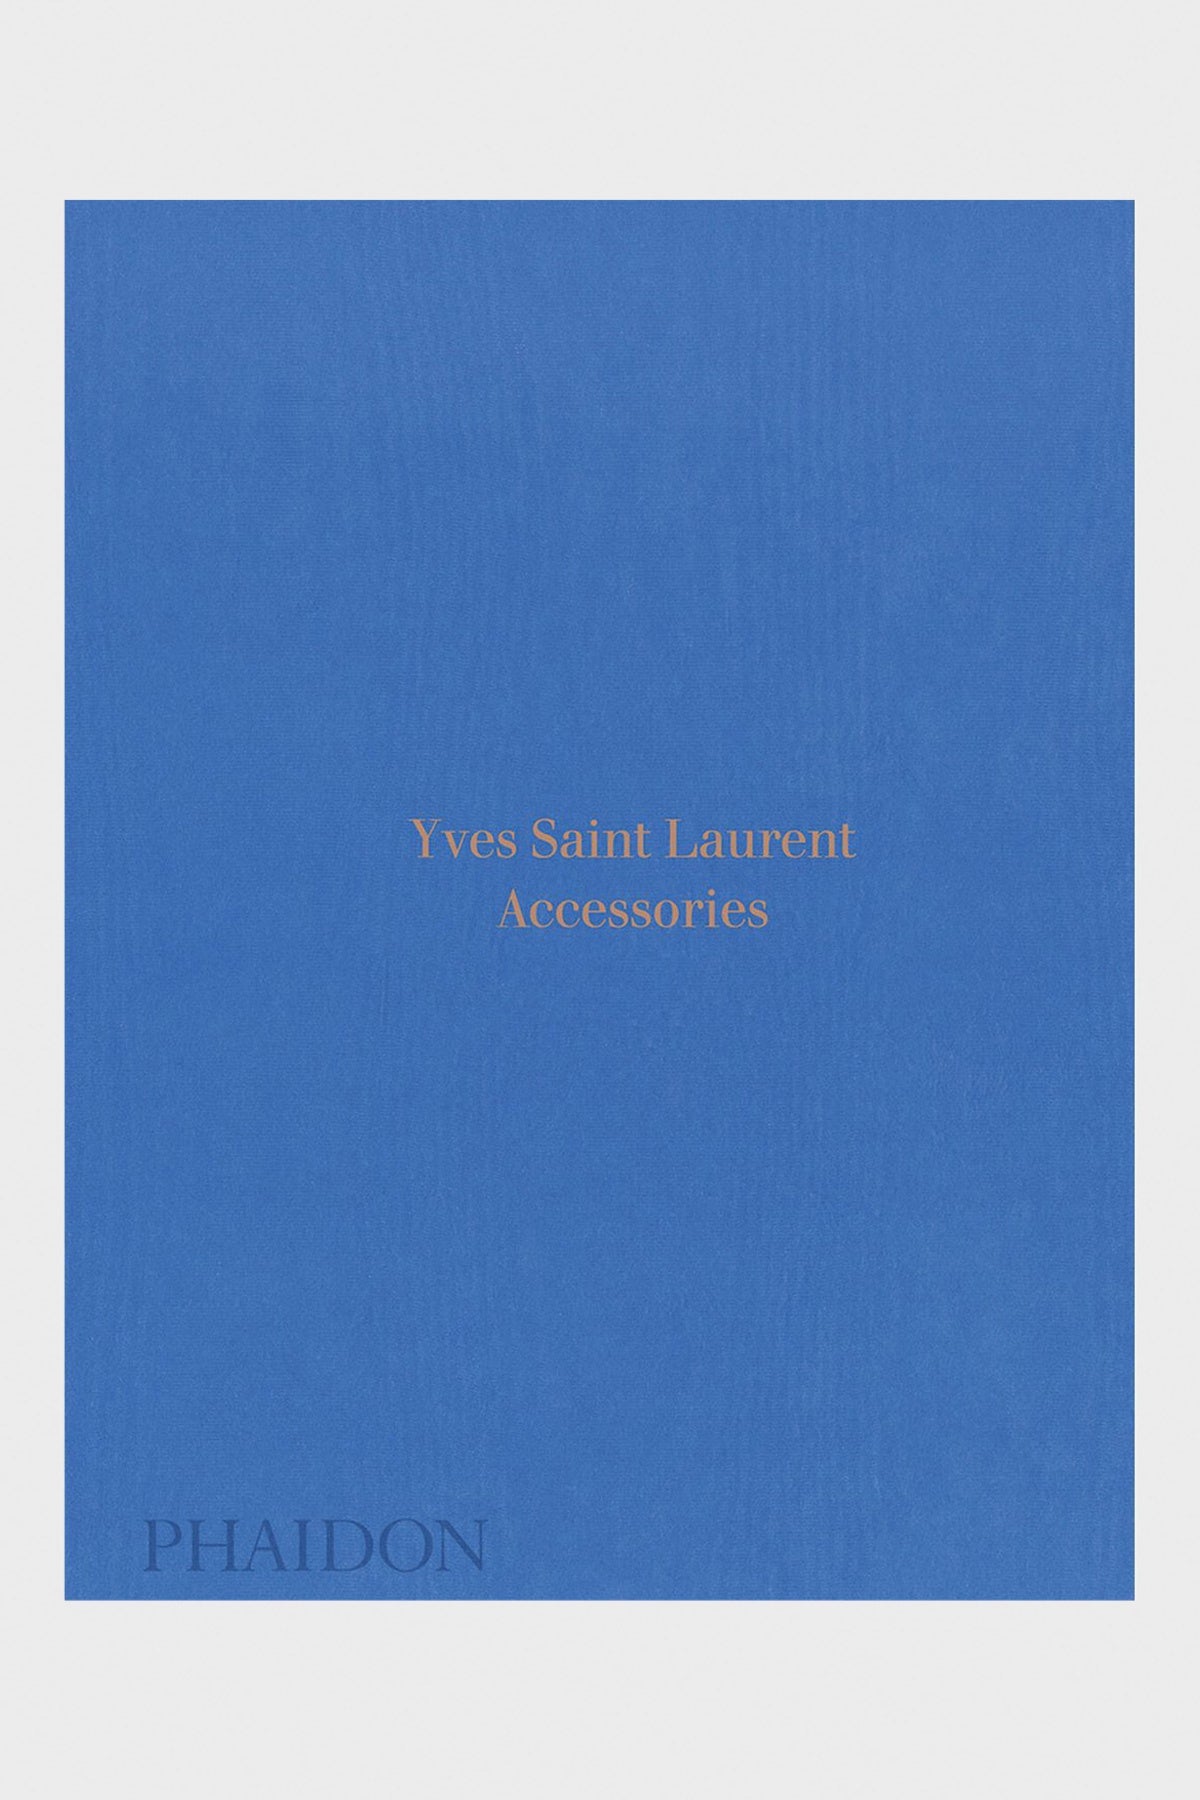 Yves Saint Laurent Accessories Book Canoe Club